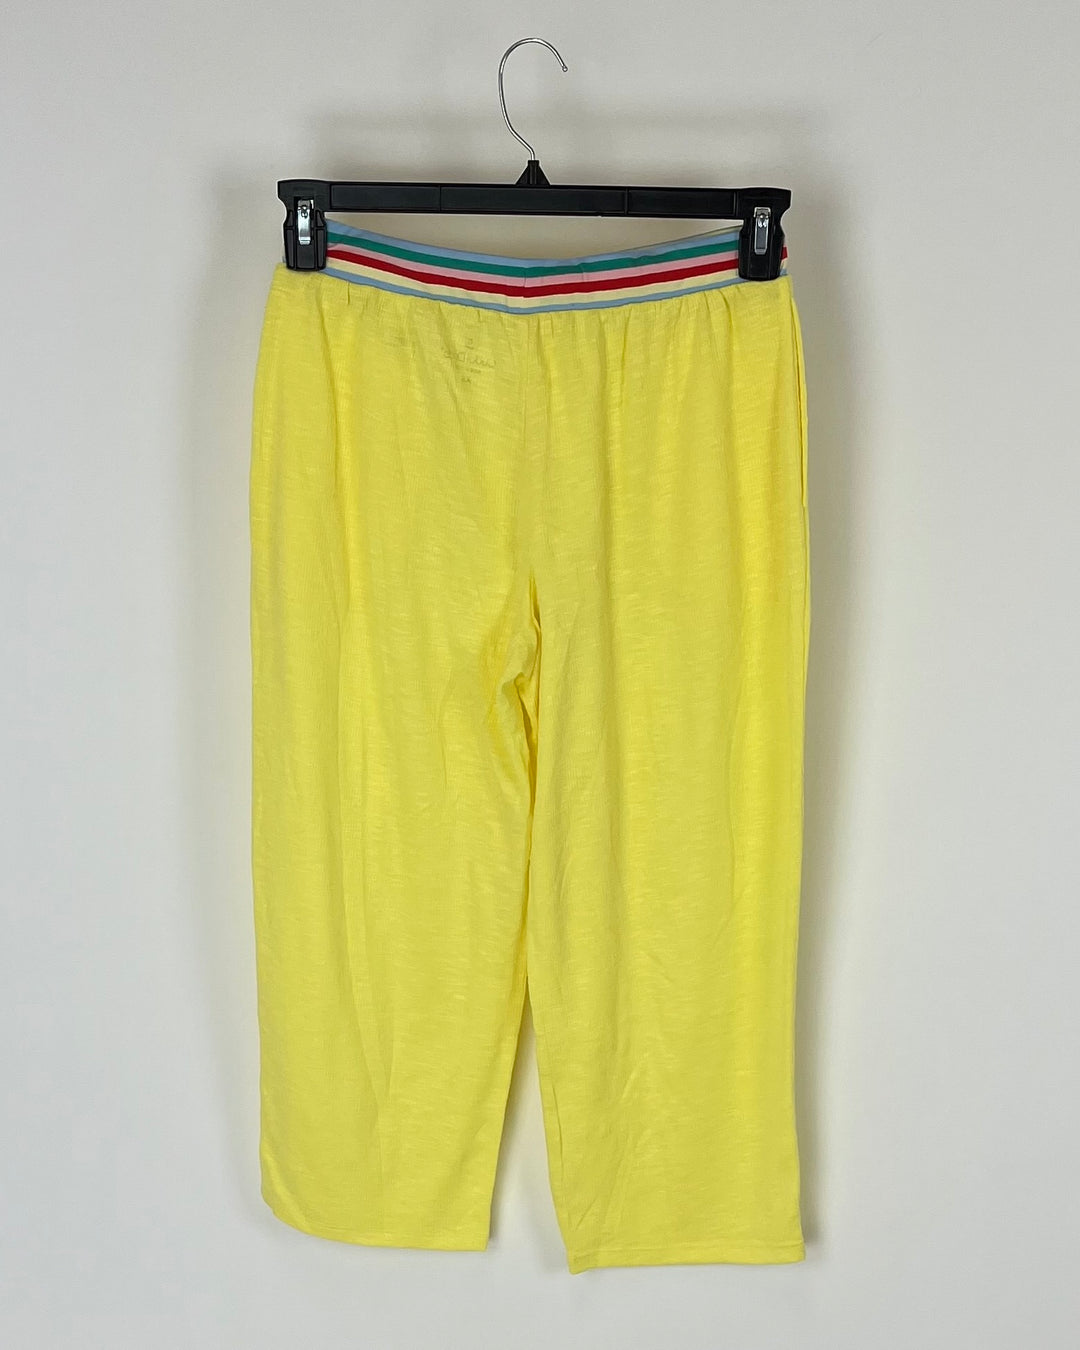 Yellow Cropped Lounge Pants - Size 2/4